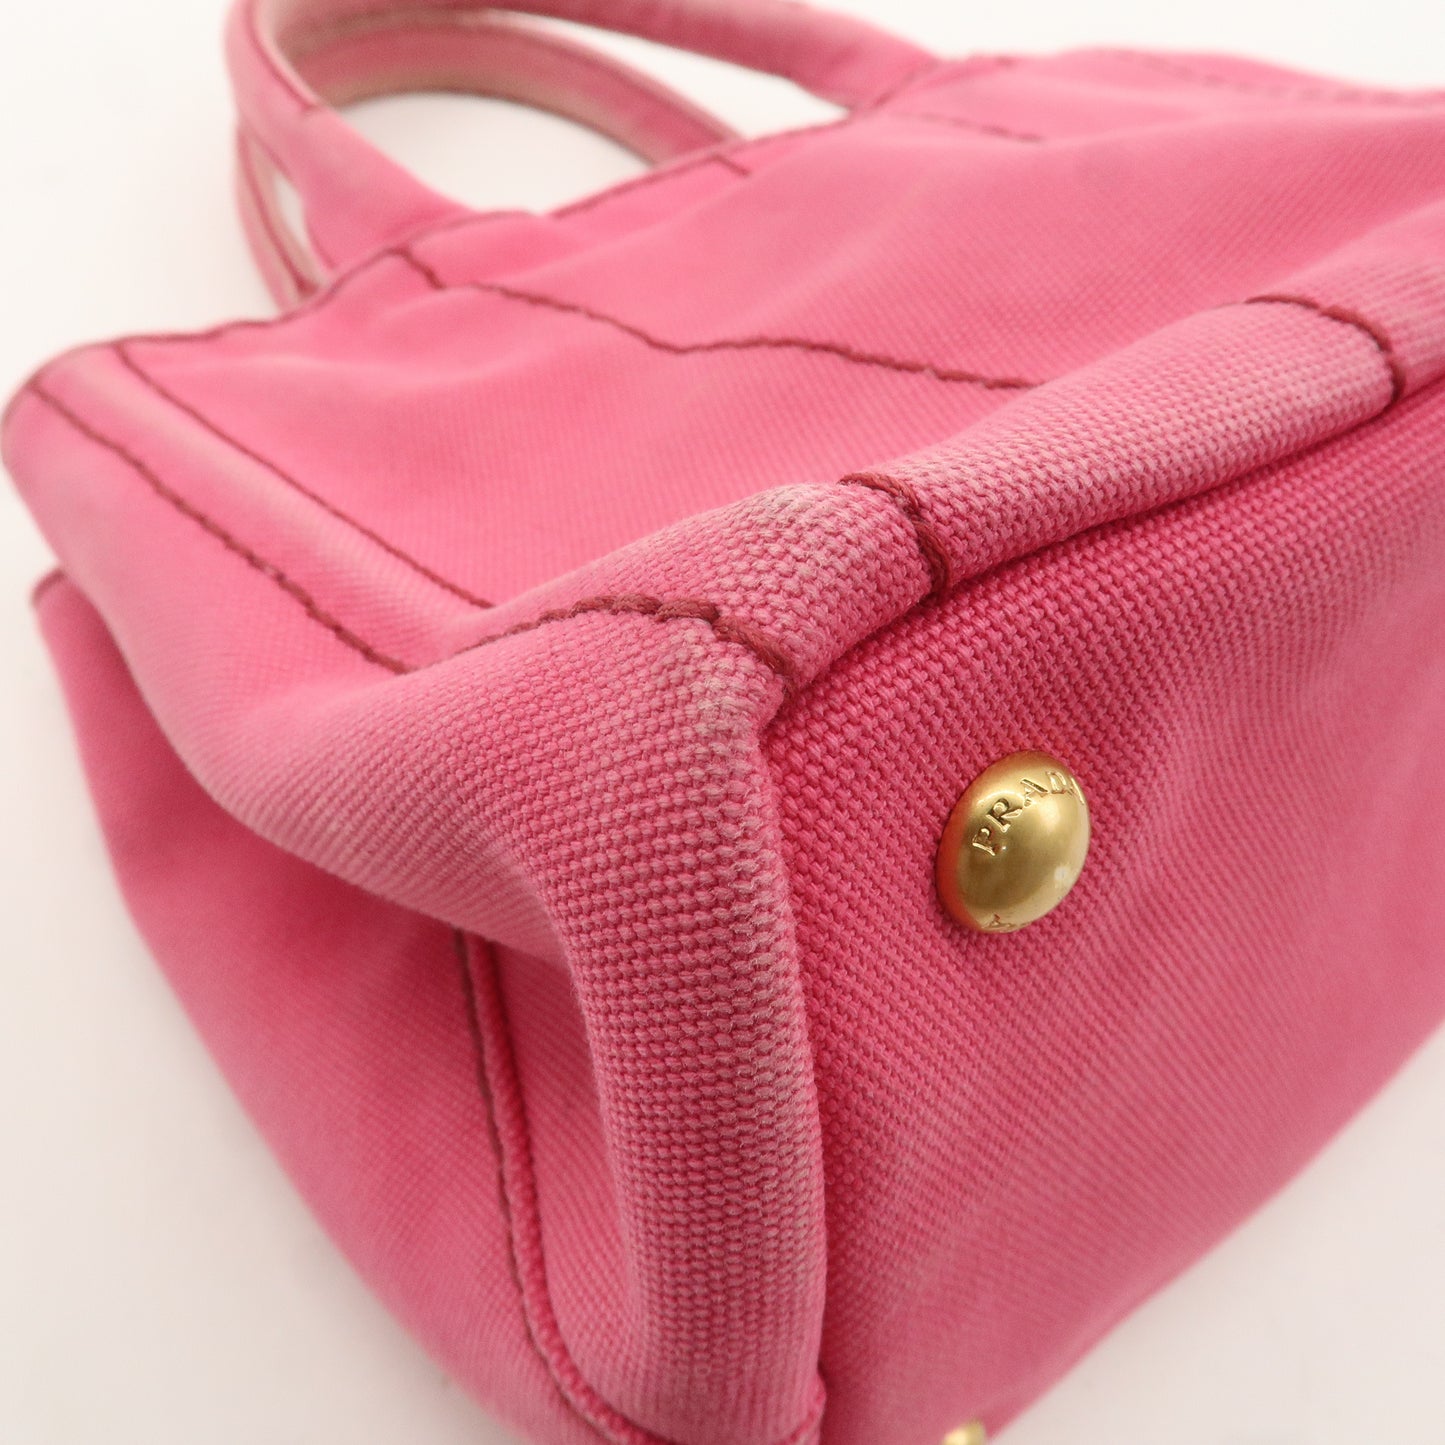 PRADA Logo Canapa Mini Canvas Tote Bag Hand Bag Pink 1BG439